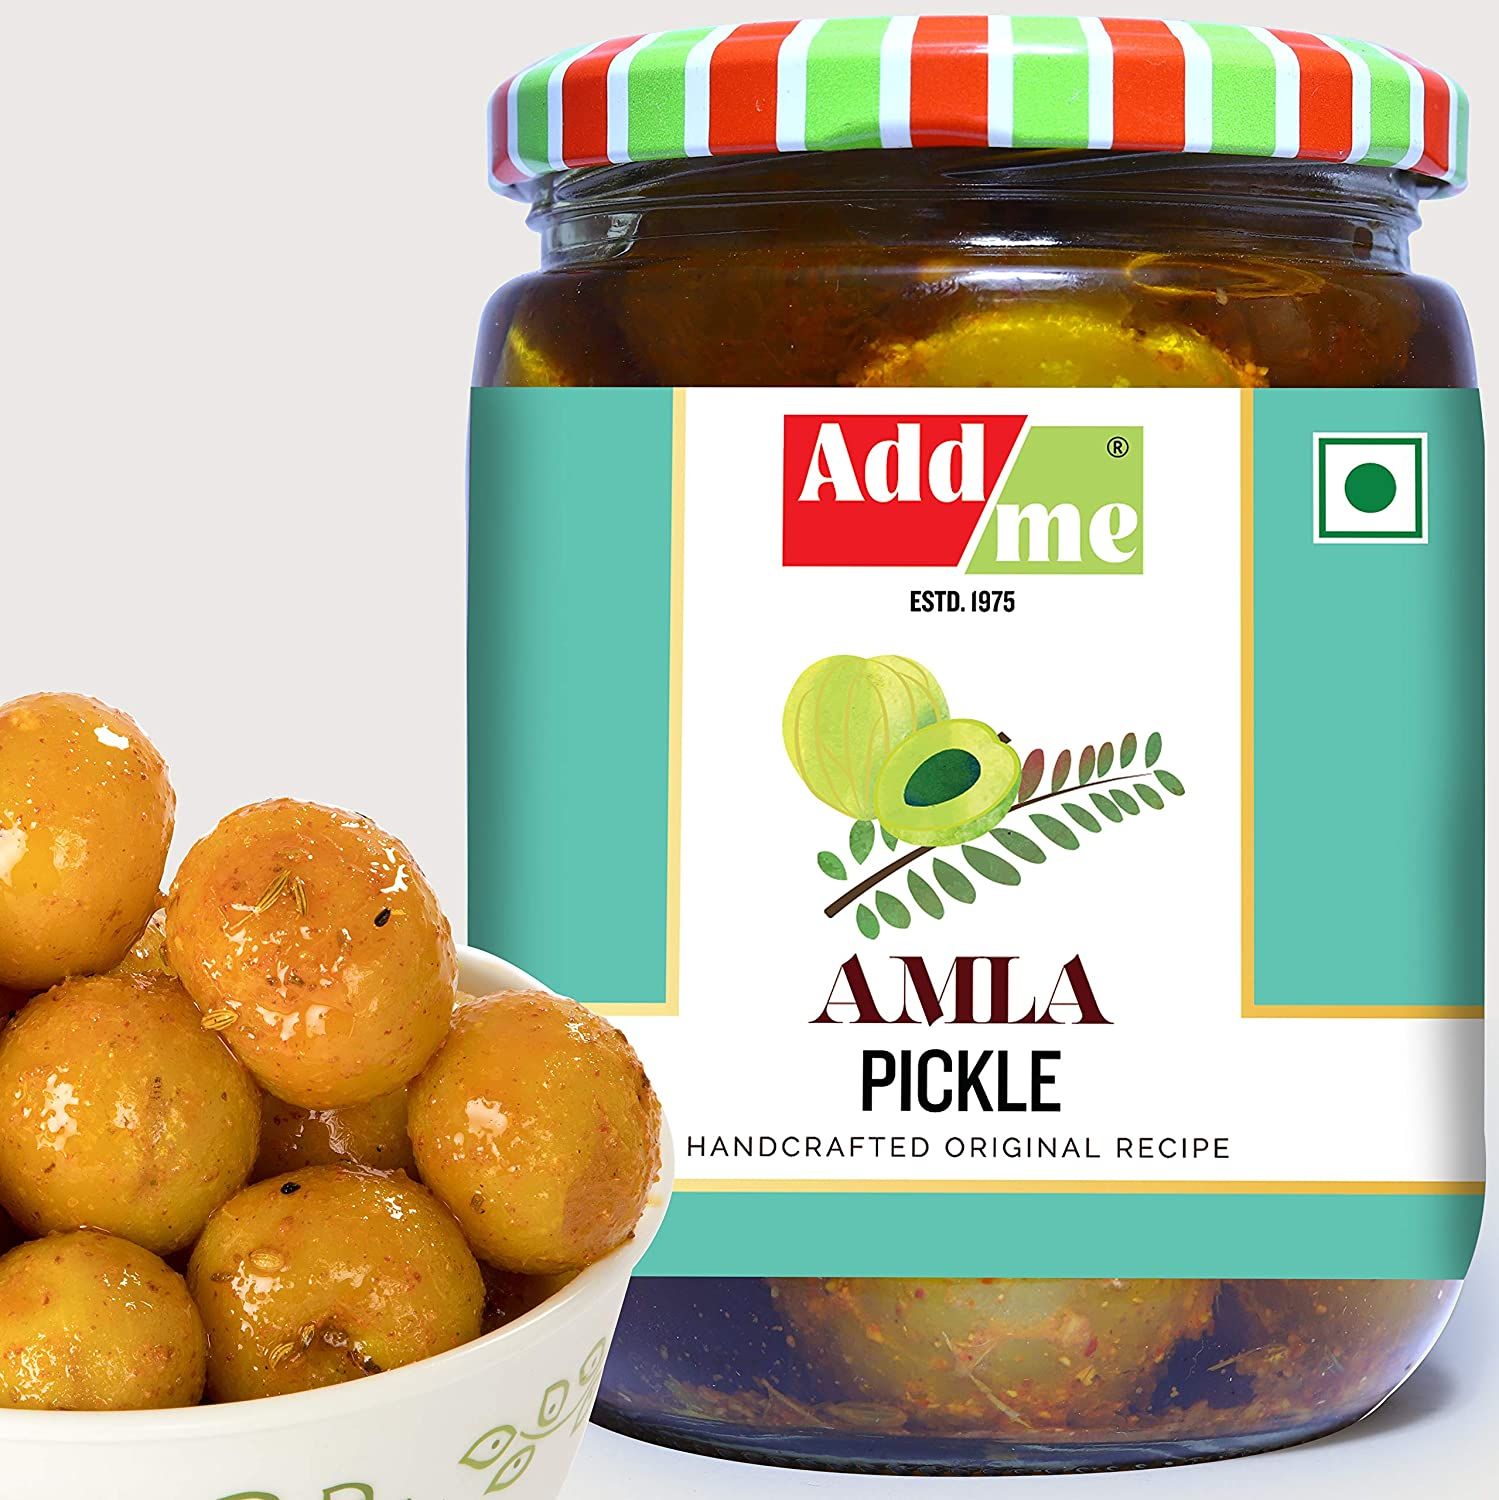 Add Me Homemade Amla Pickle Image